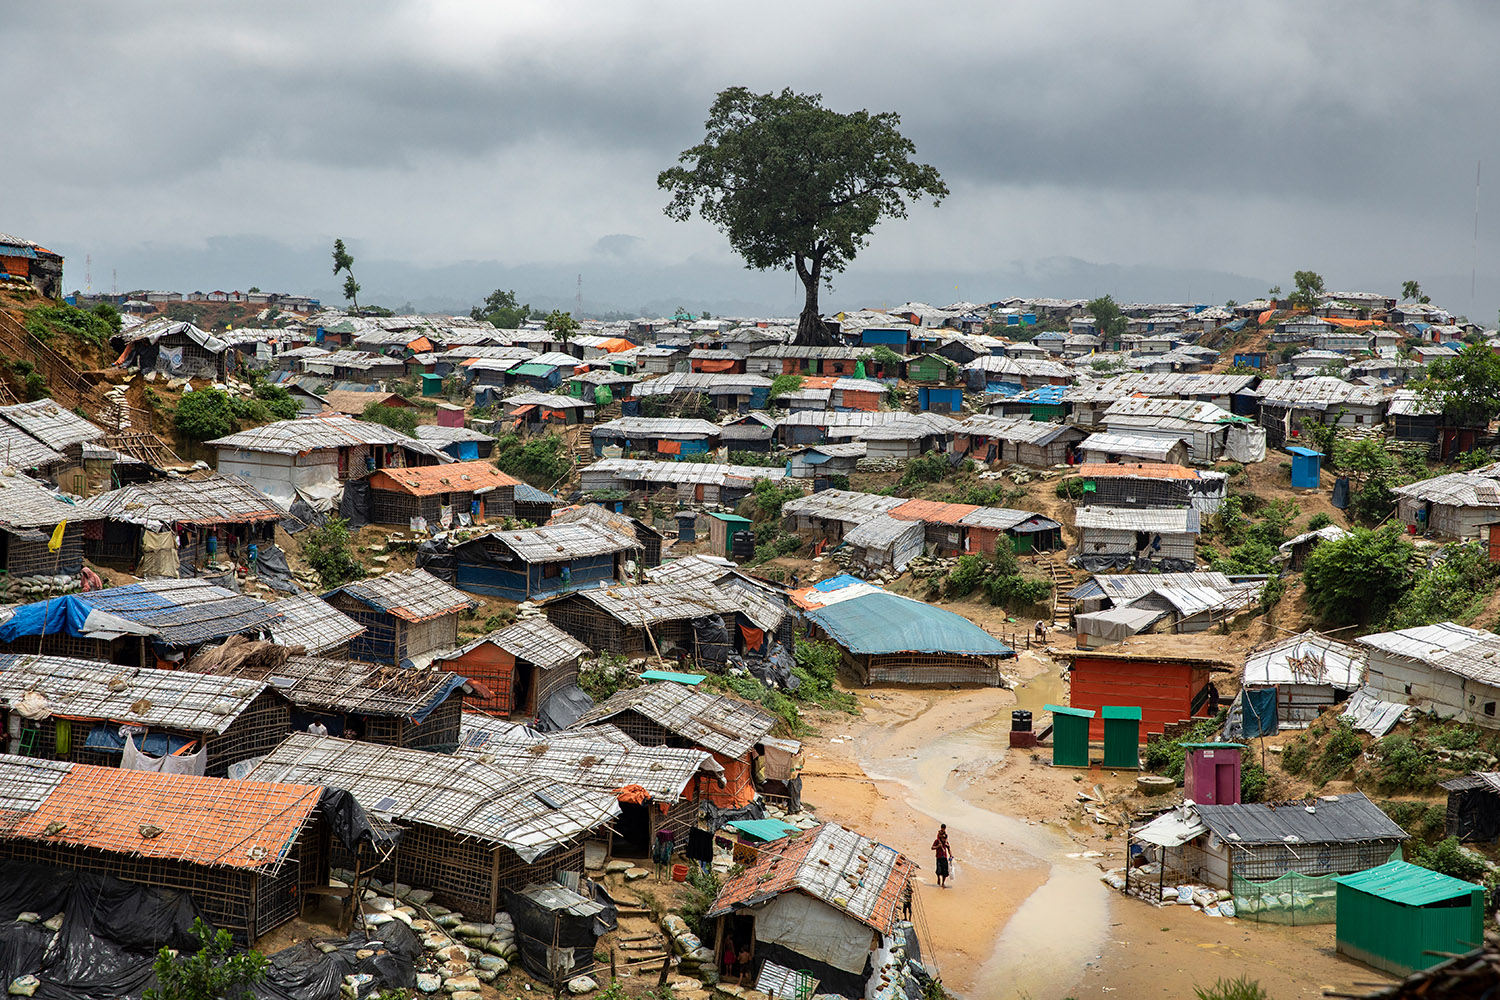 Vue du camp de réfugiés de Cox's Bazar